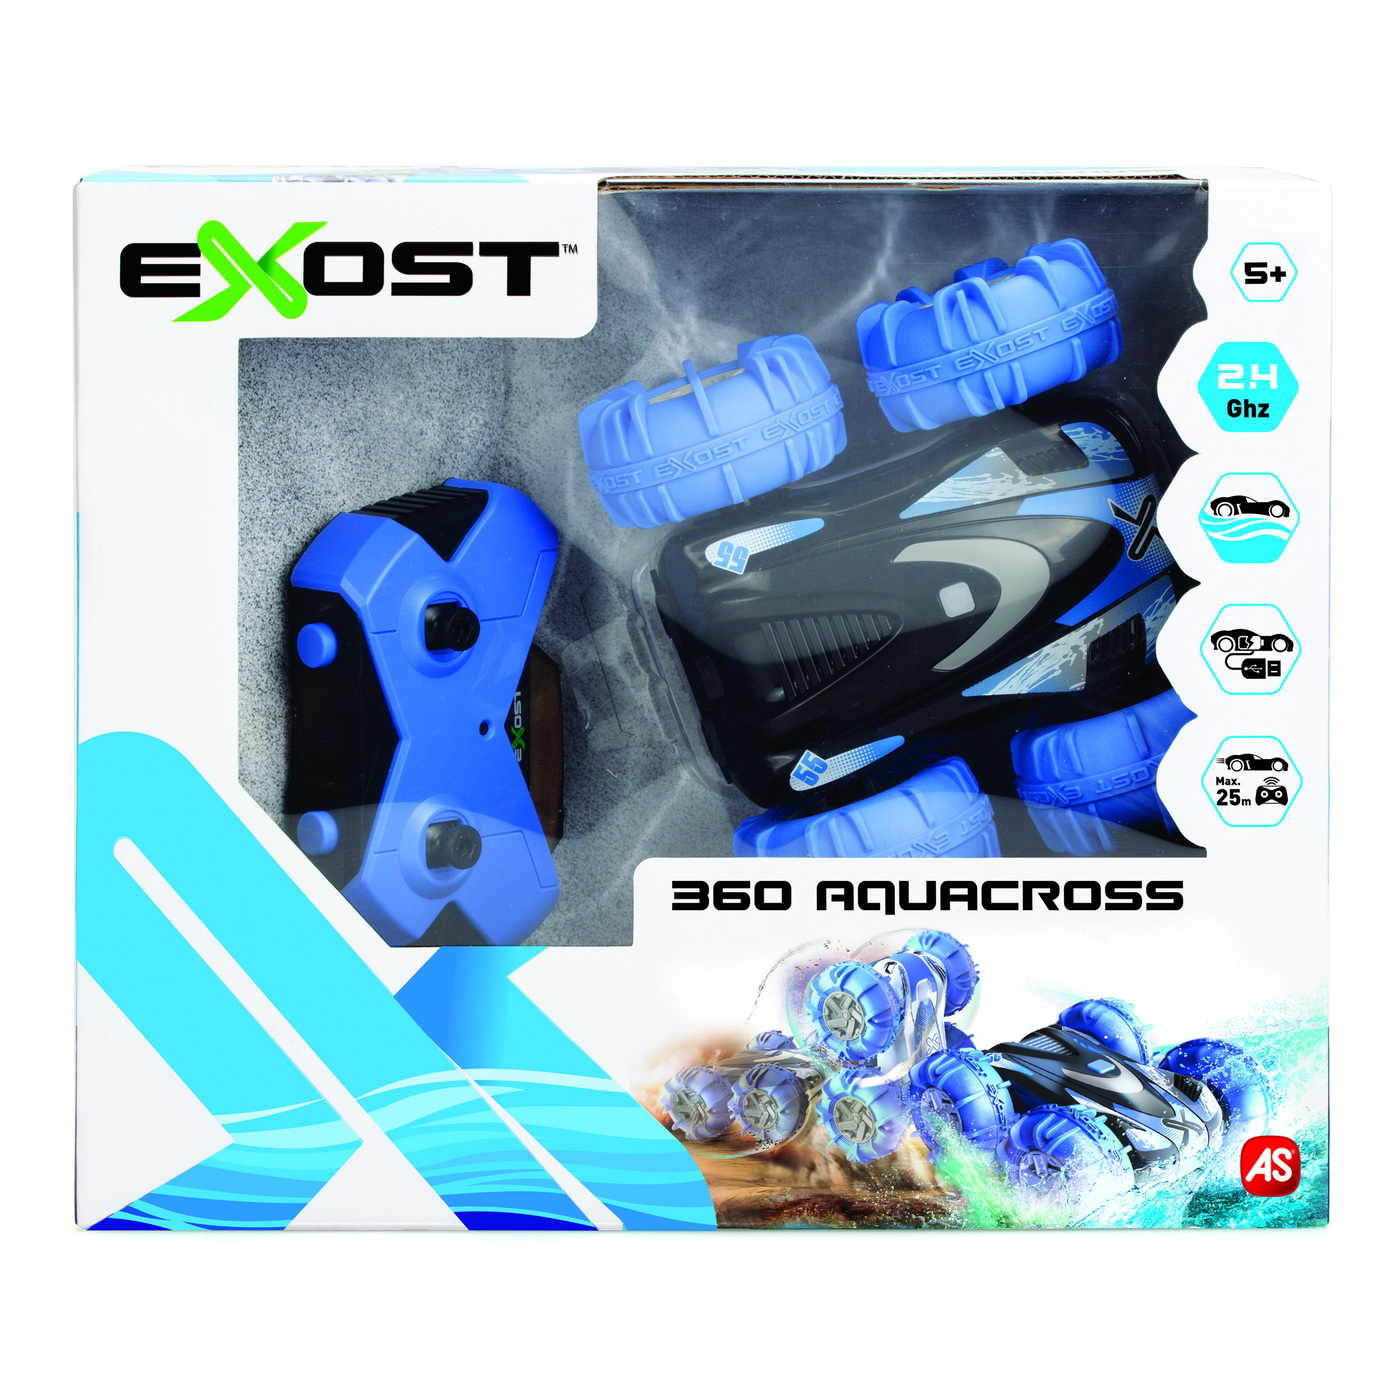 Masina cu radiocomanda - Exost - 360 Aquacross | Silverlit - 0